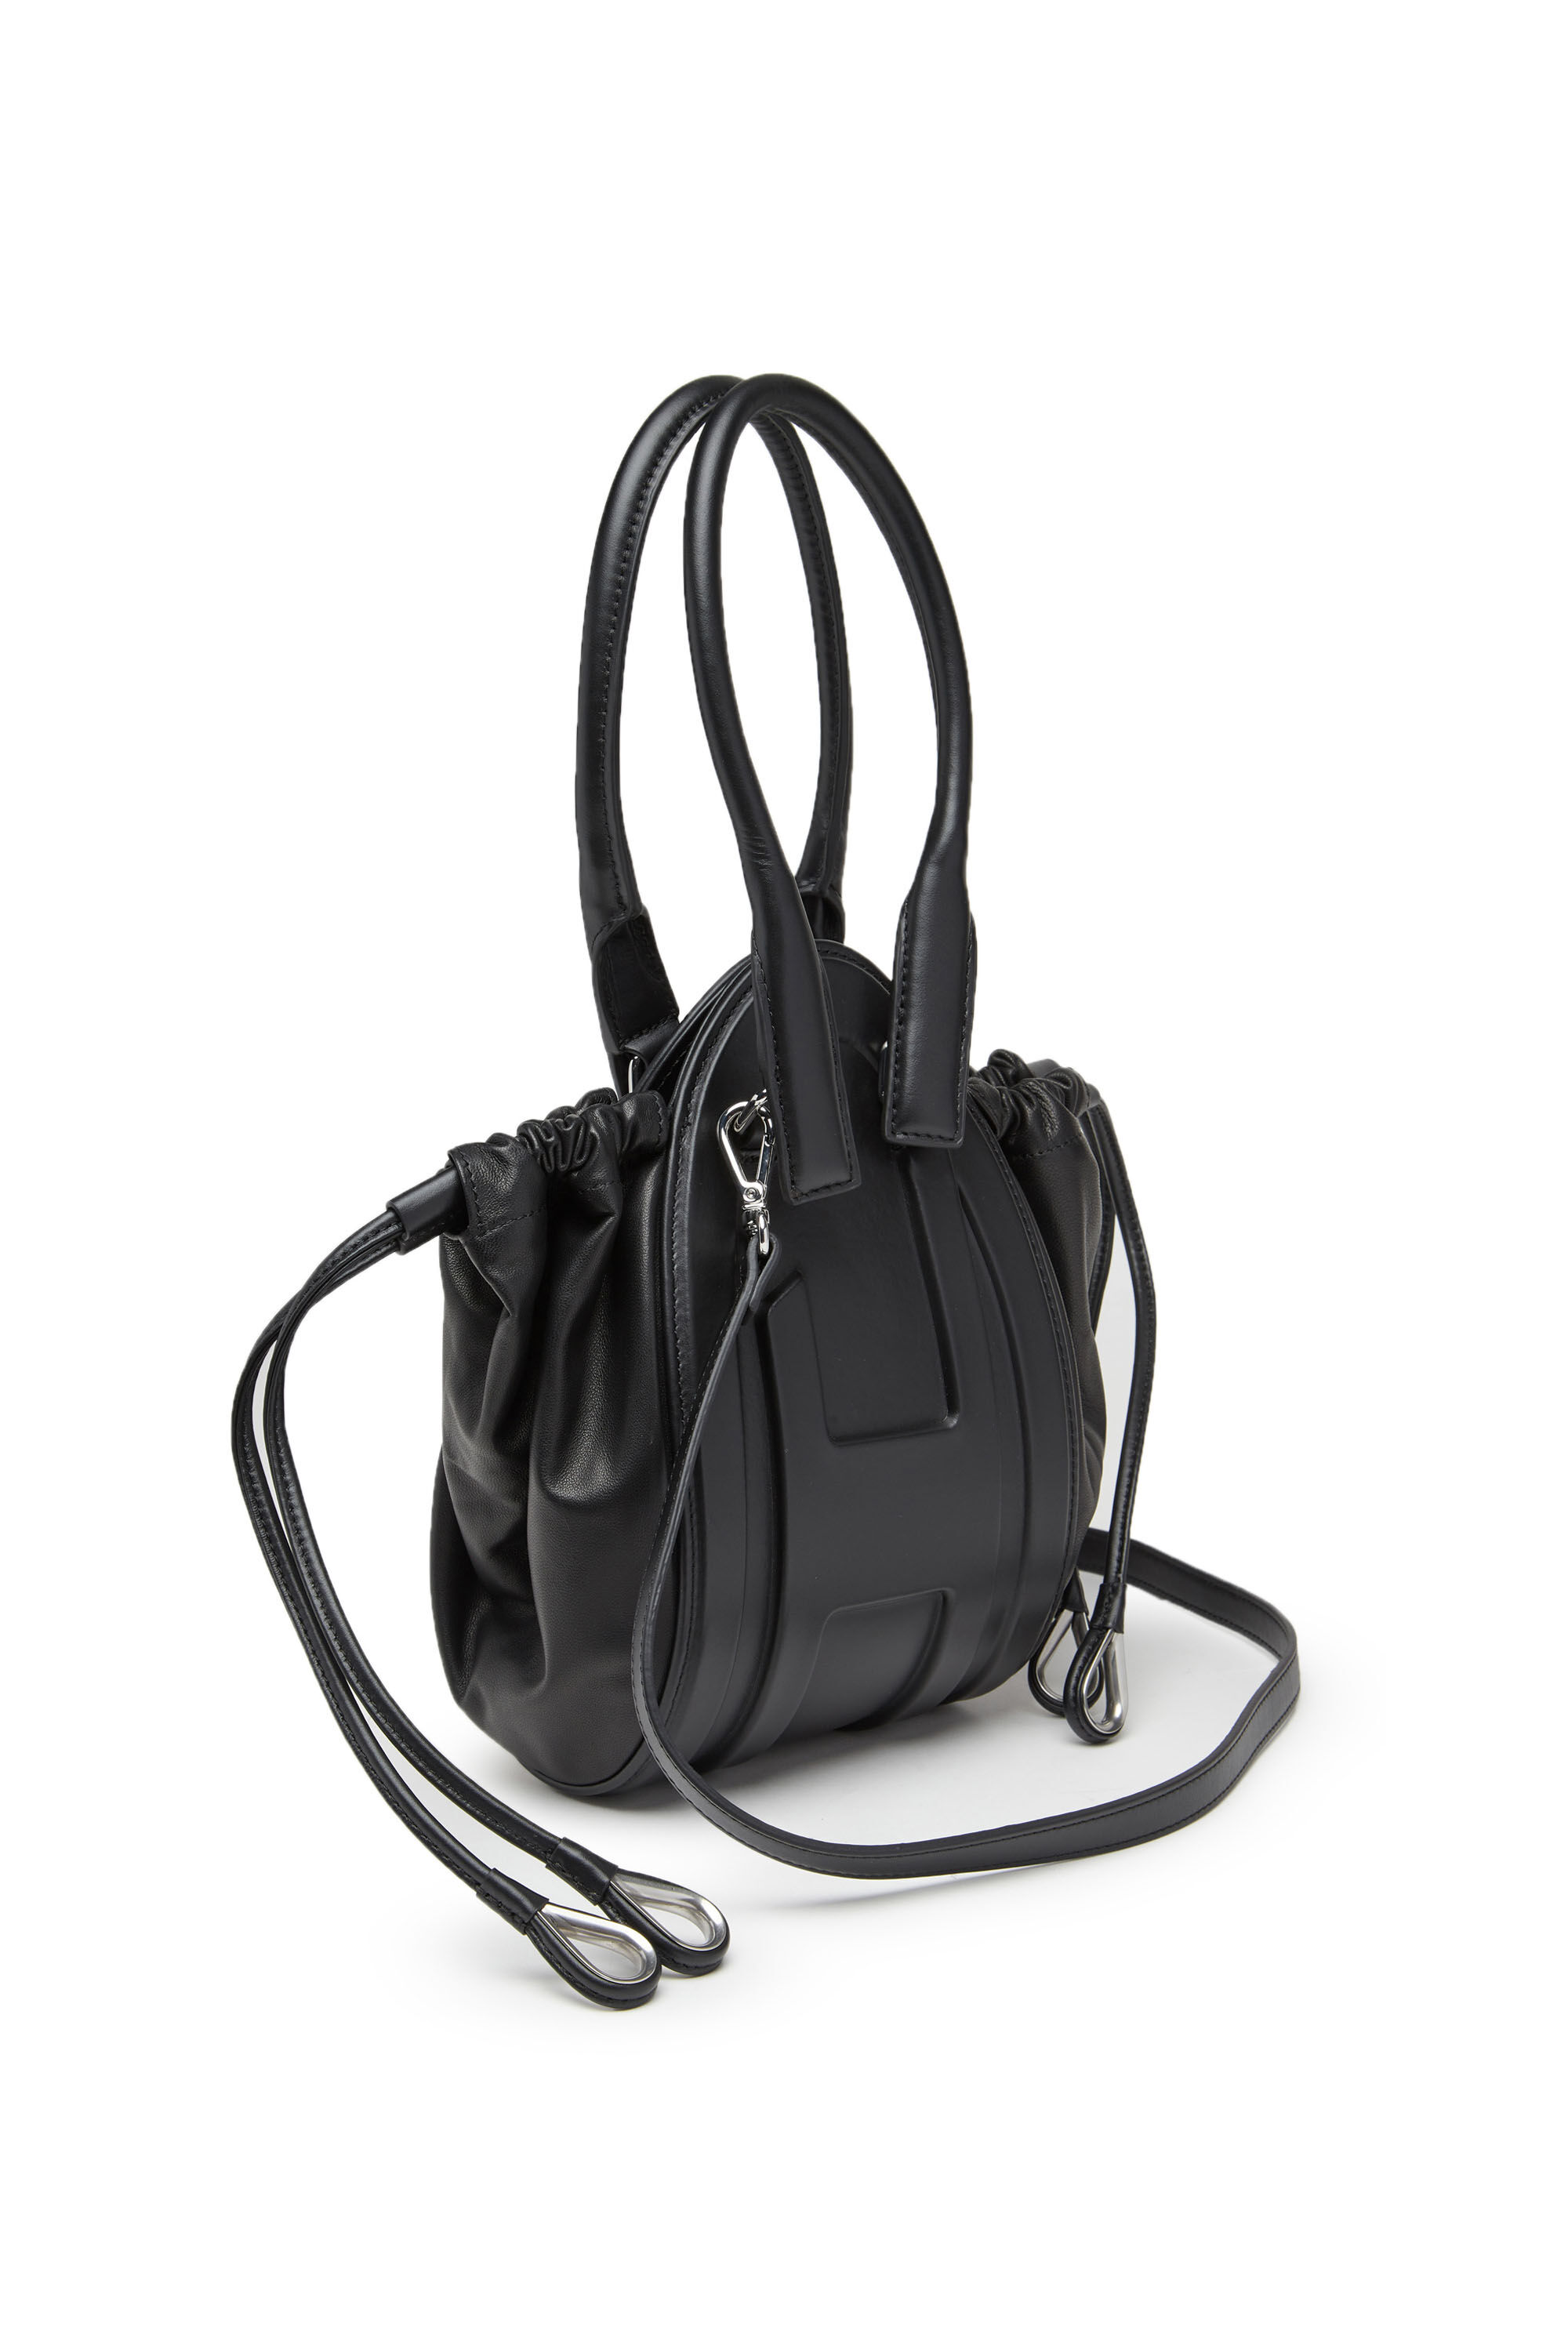 1DR-FOLD XS Woman: Oval logo handbag in nappa leather | Diesel